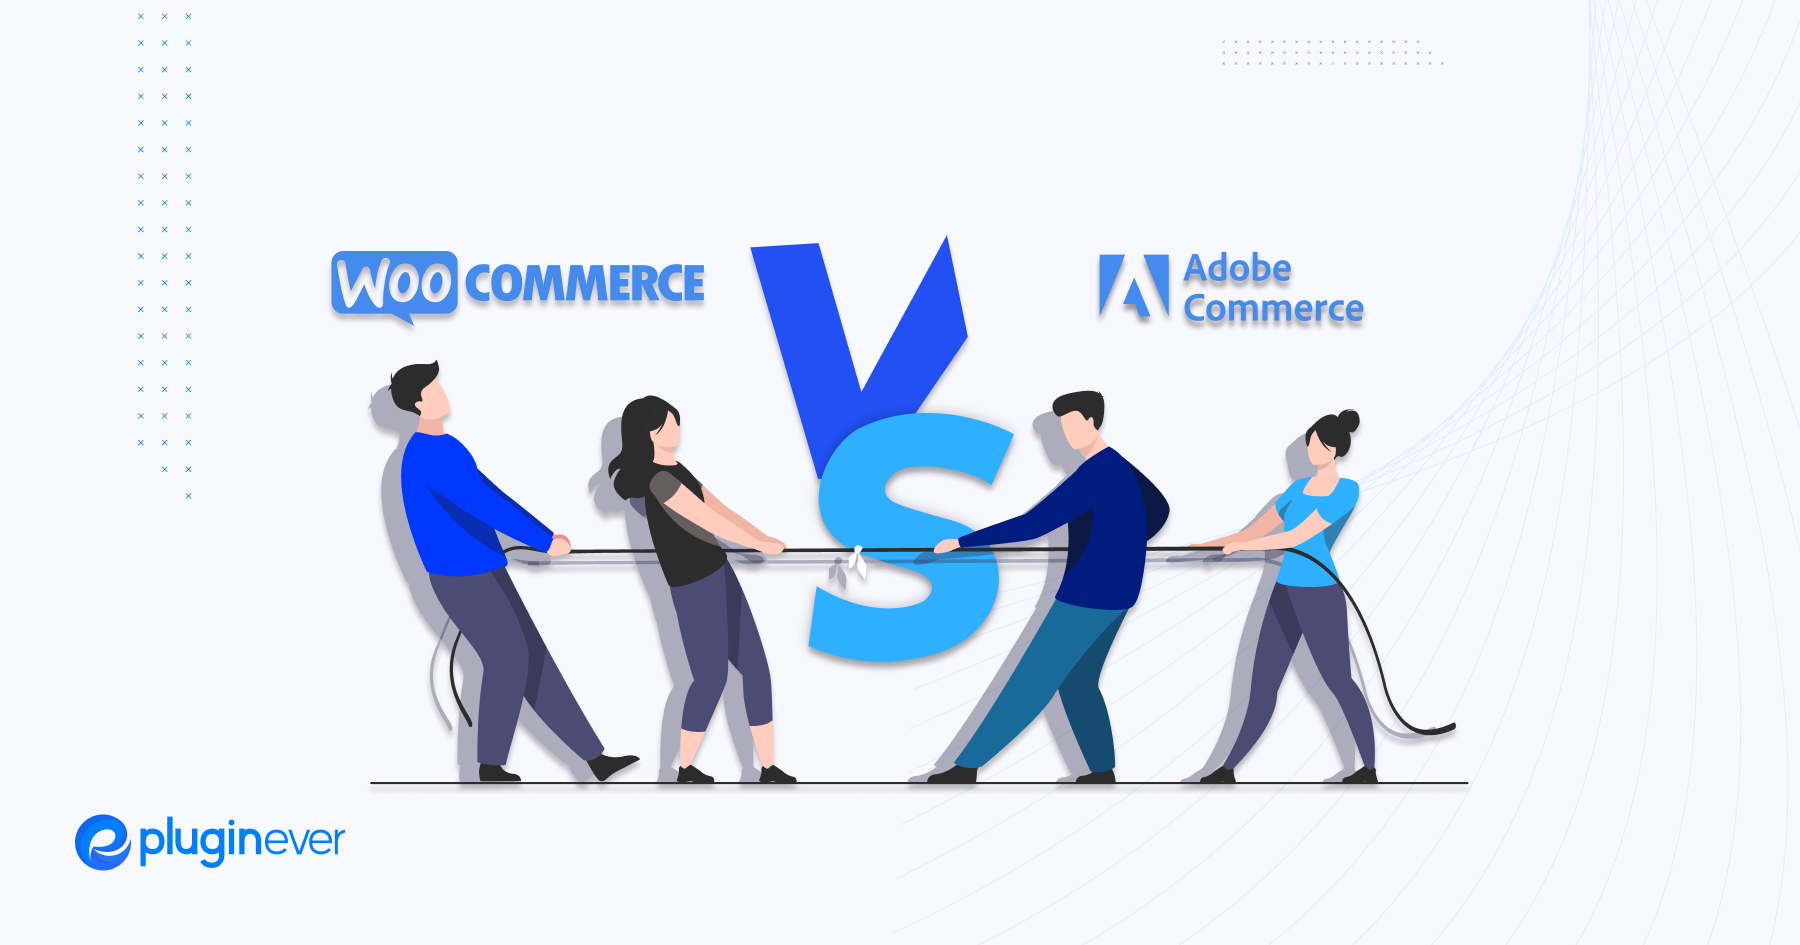 WooCommerce vs Adobe Commerce